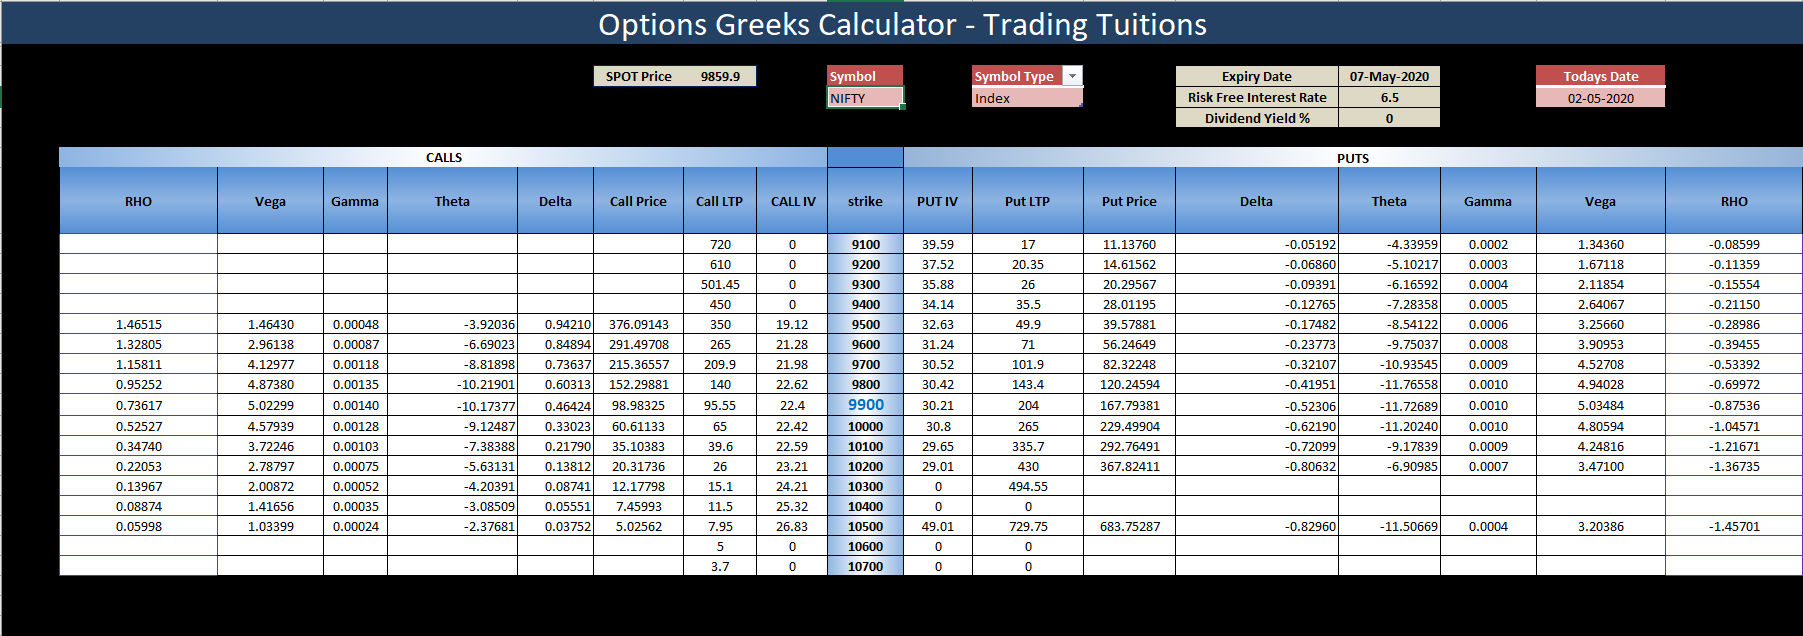 Option-Greeks-Calculator 